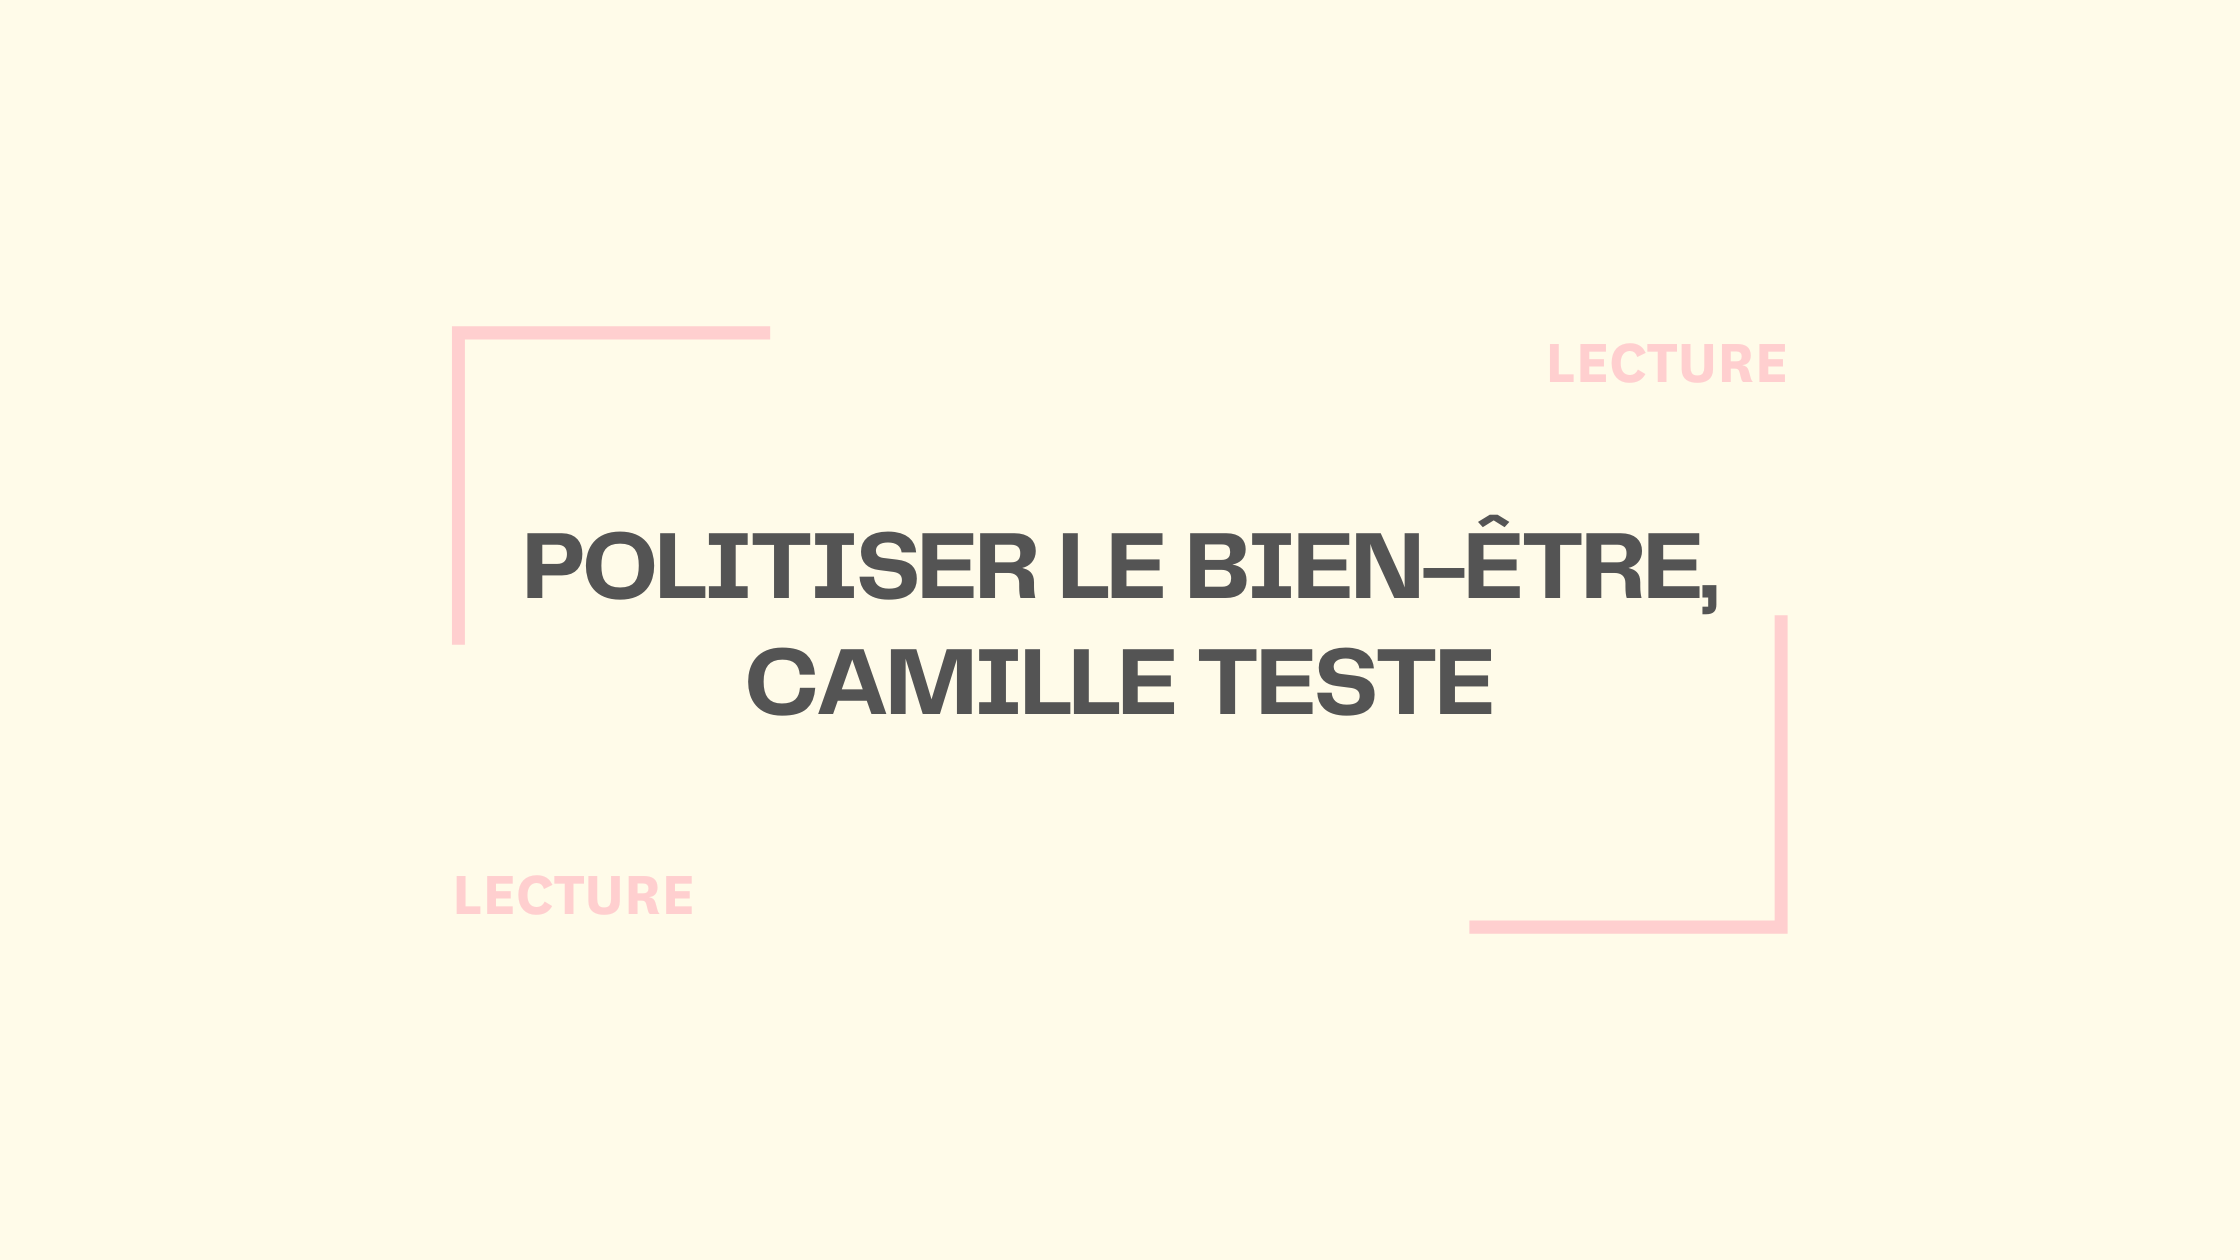 Politiser le bien-être - Camille Teste